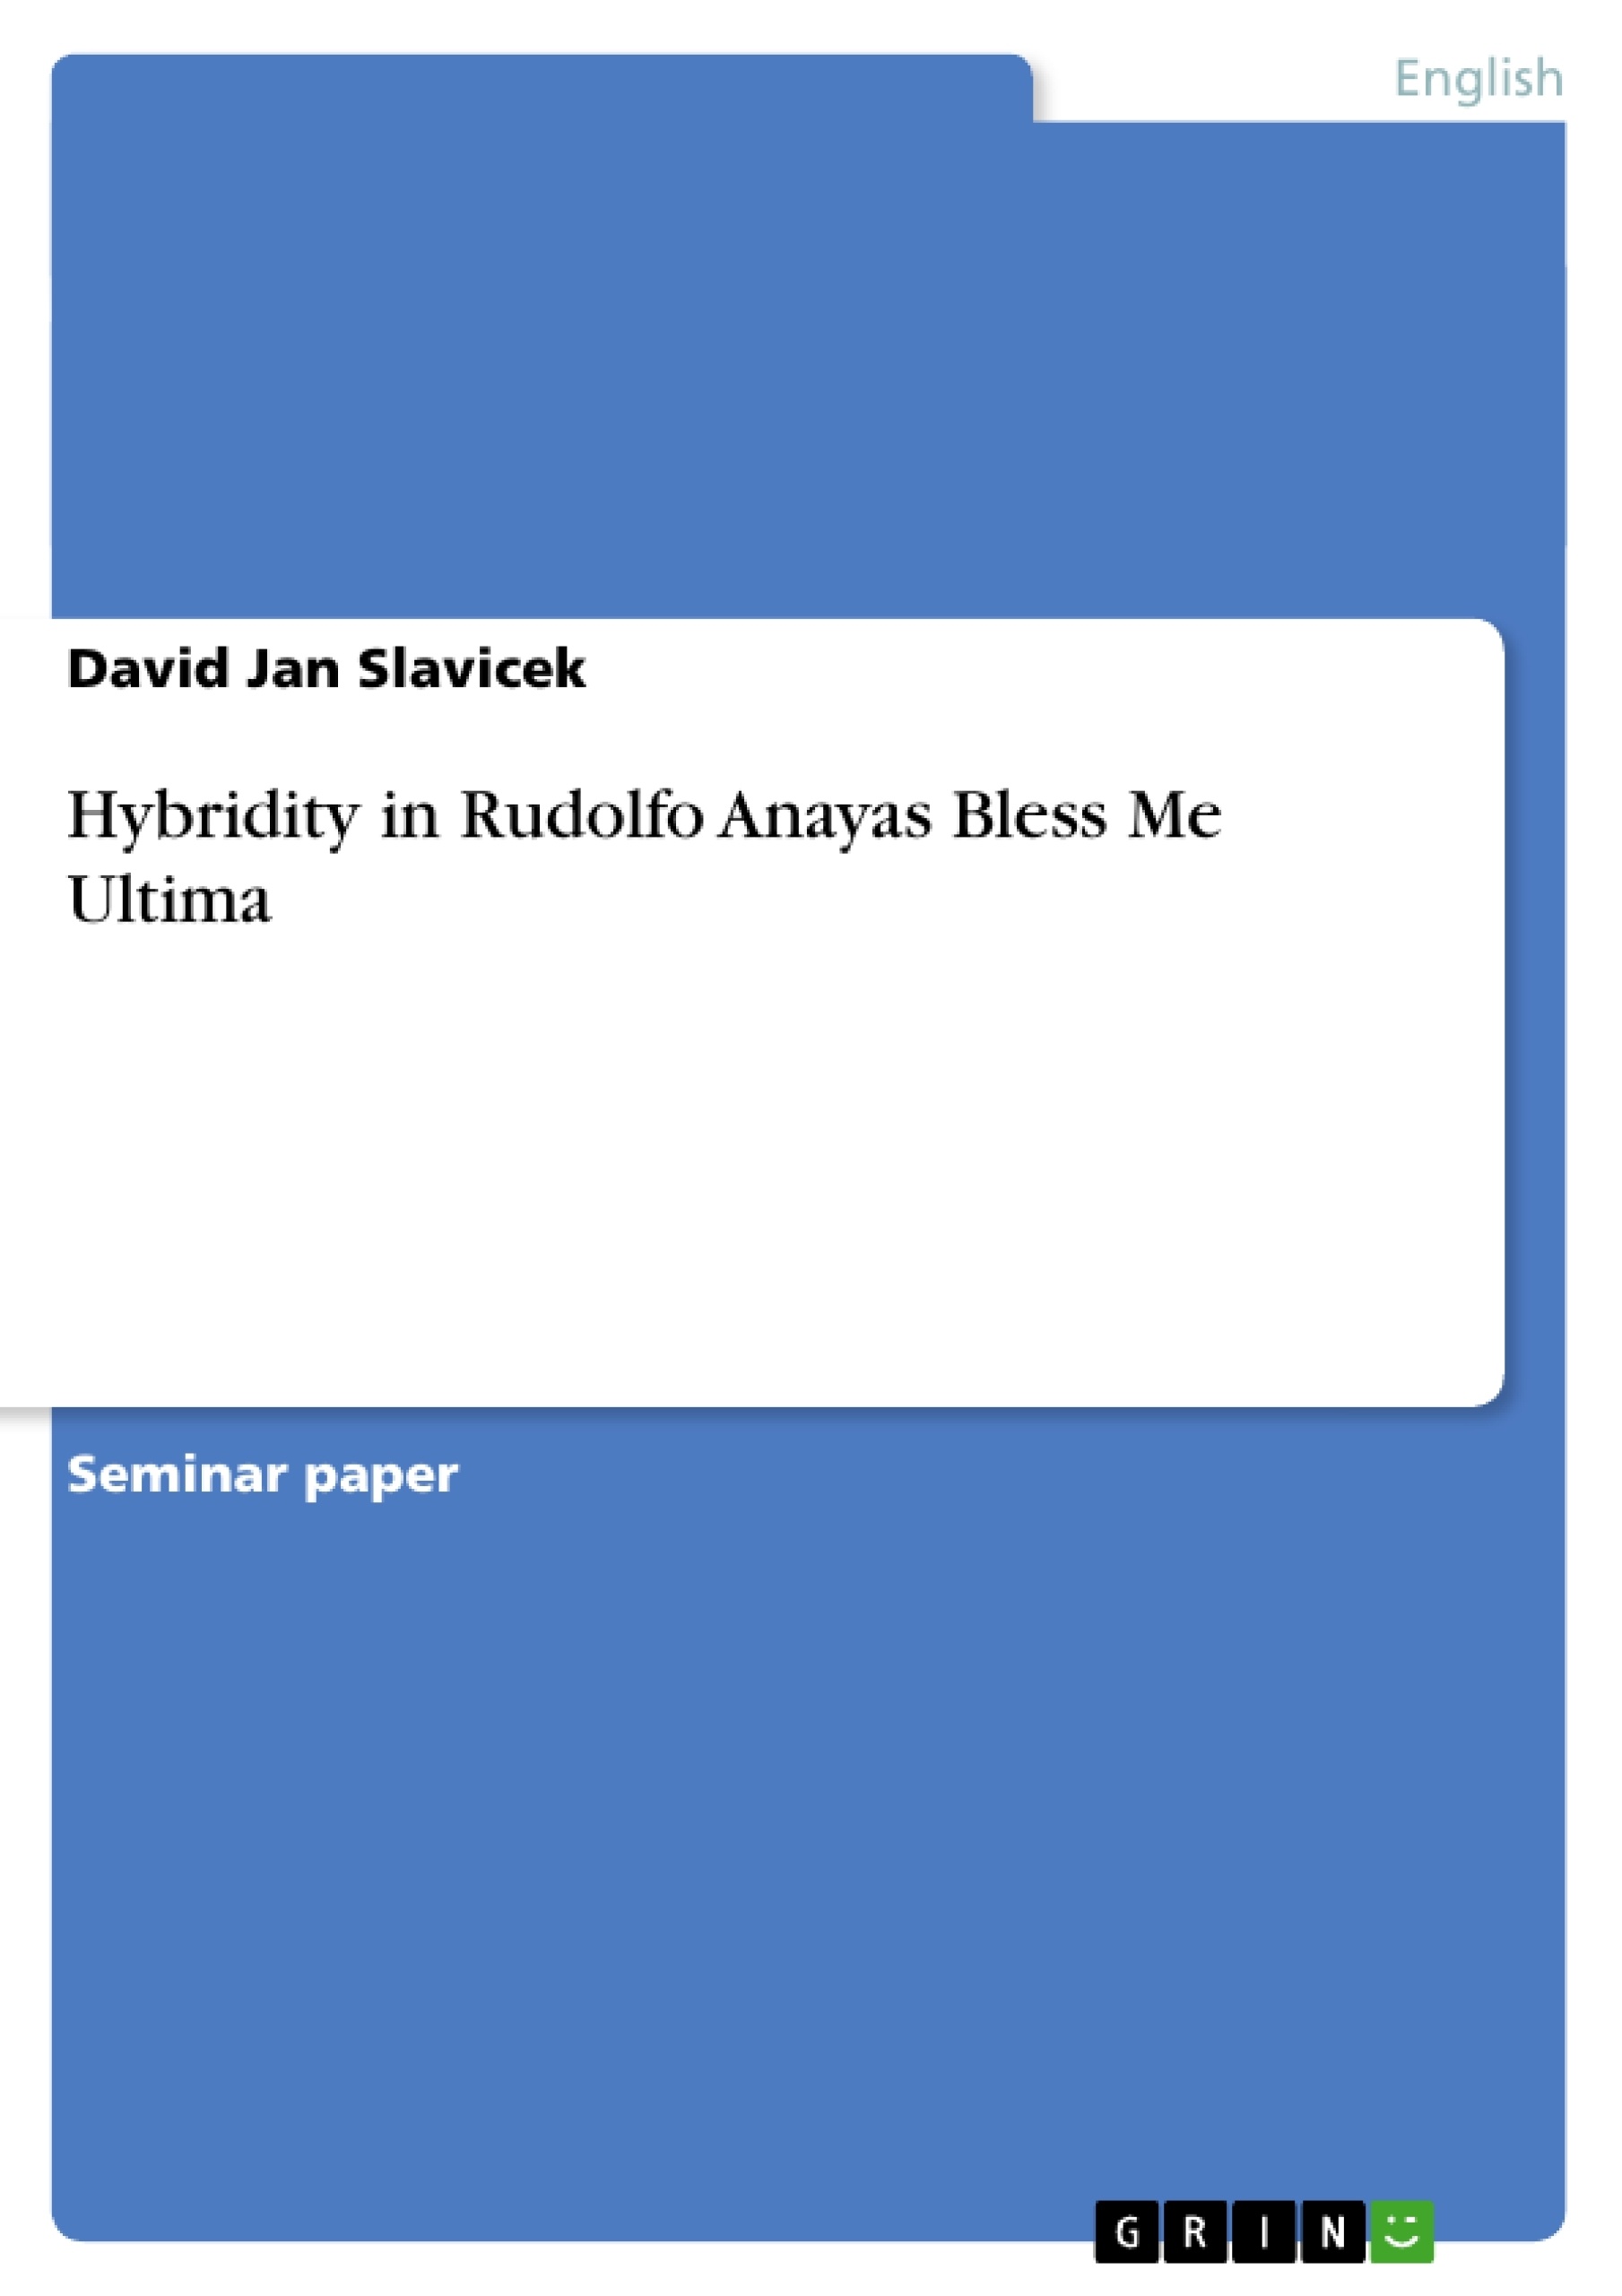 Título: Hybridity in Rudolfo Anayas Bless Me Ultima